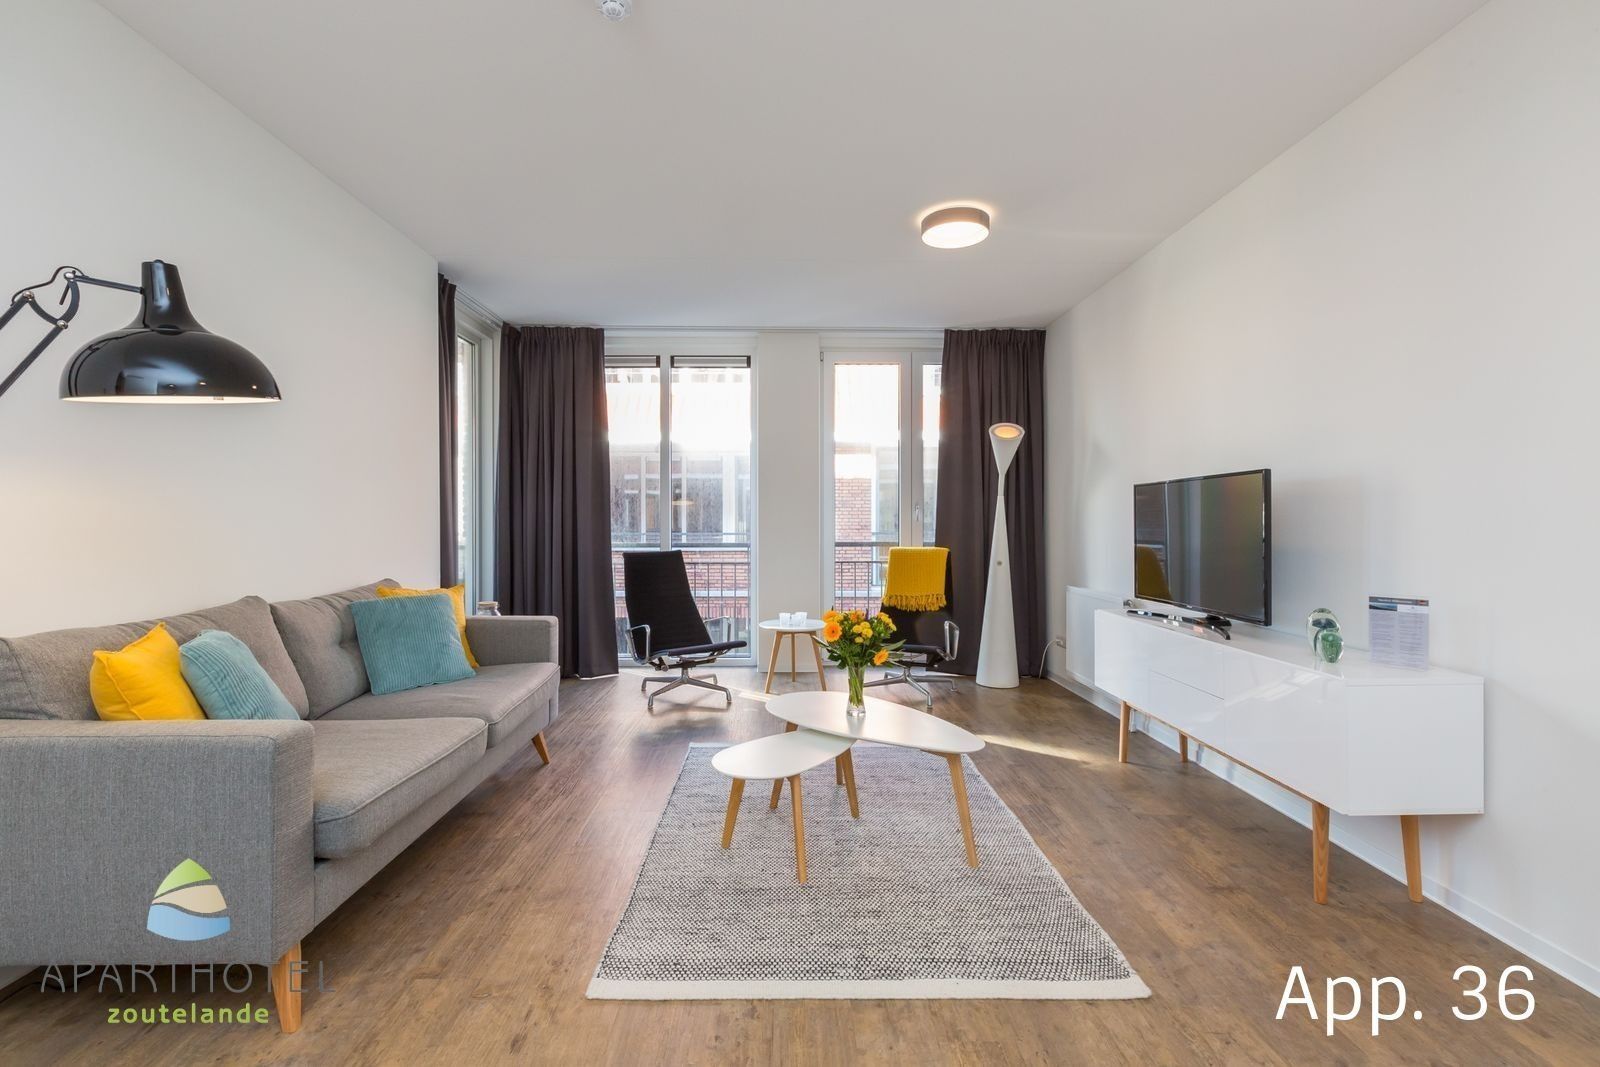 Appartement Luxury 3-person comfort apartment | Zoutelande Zoutelande 1